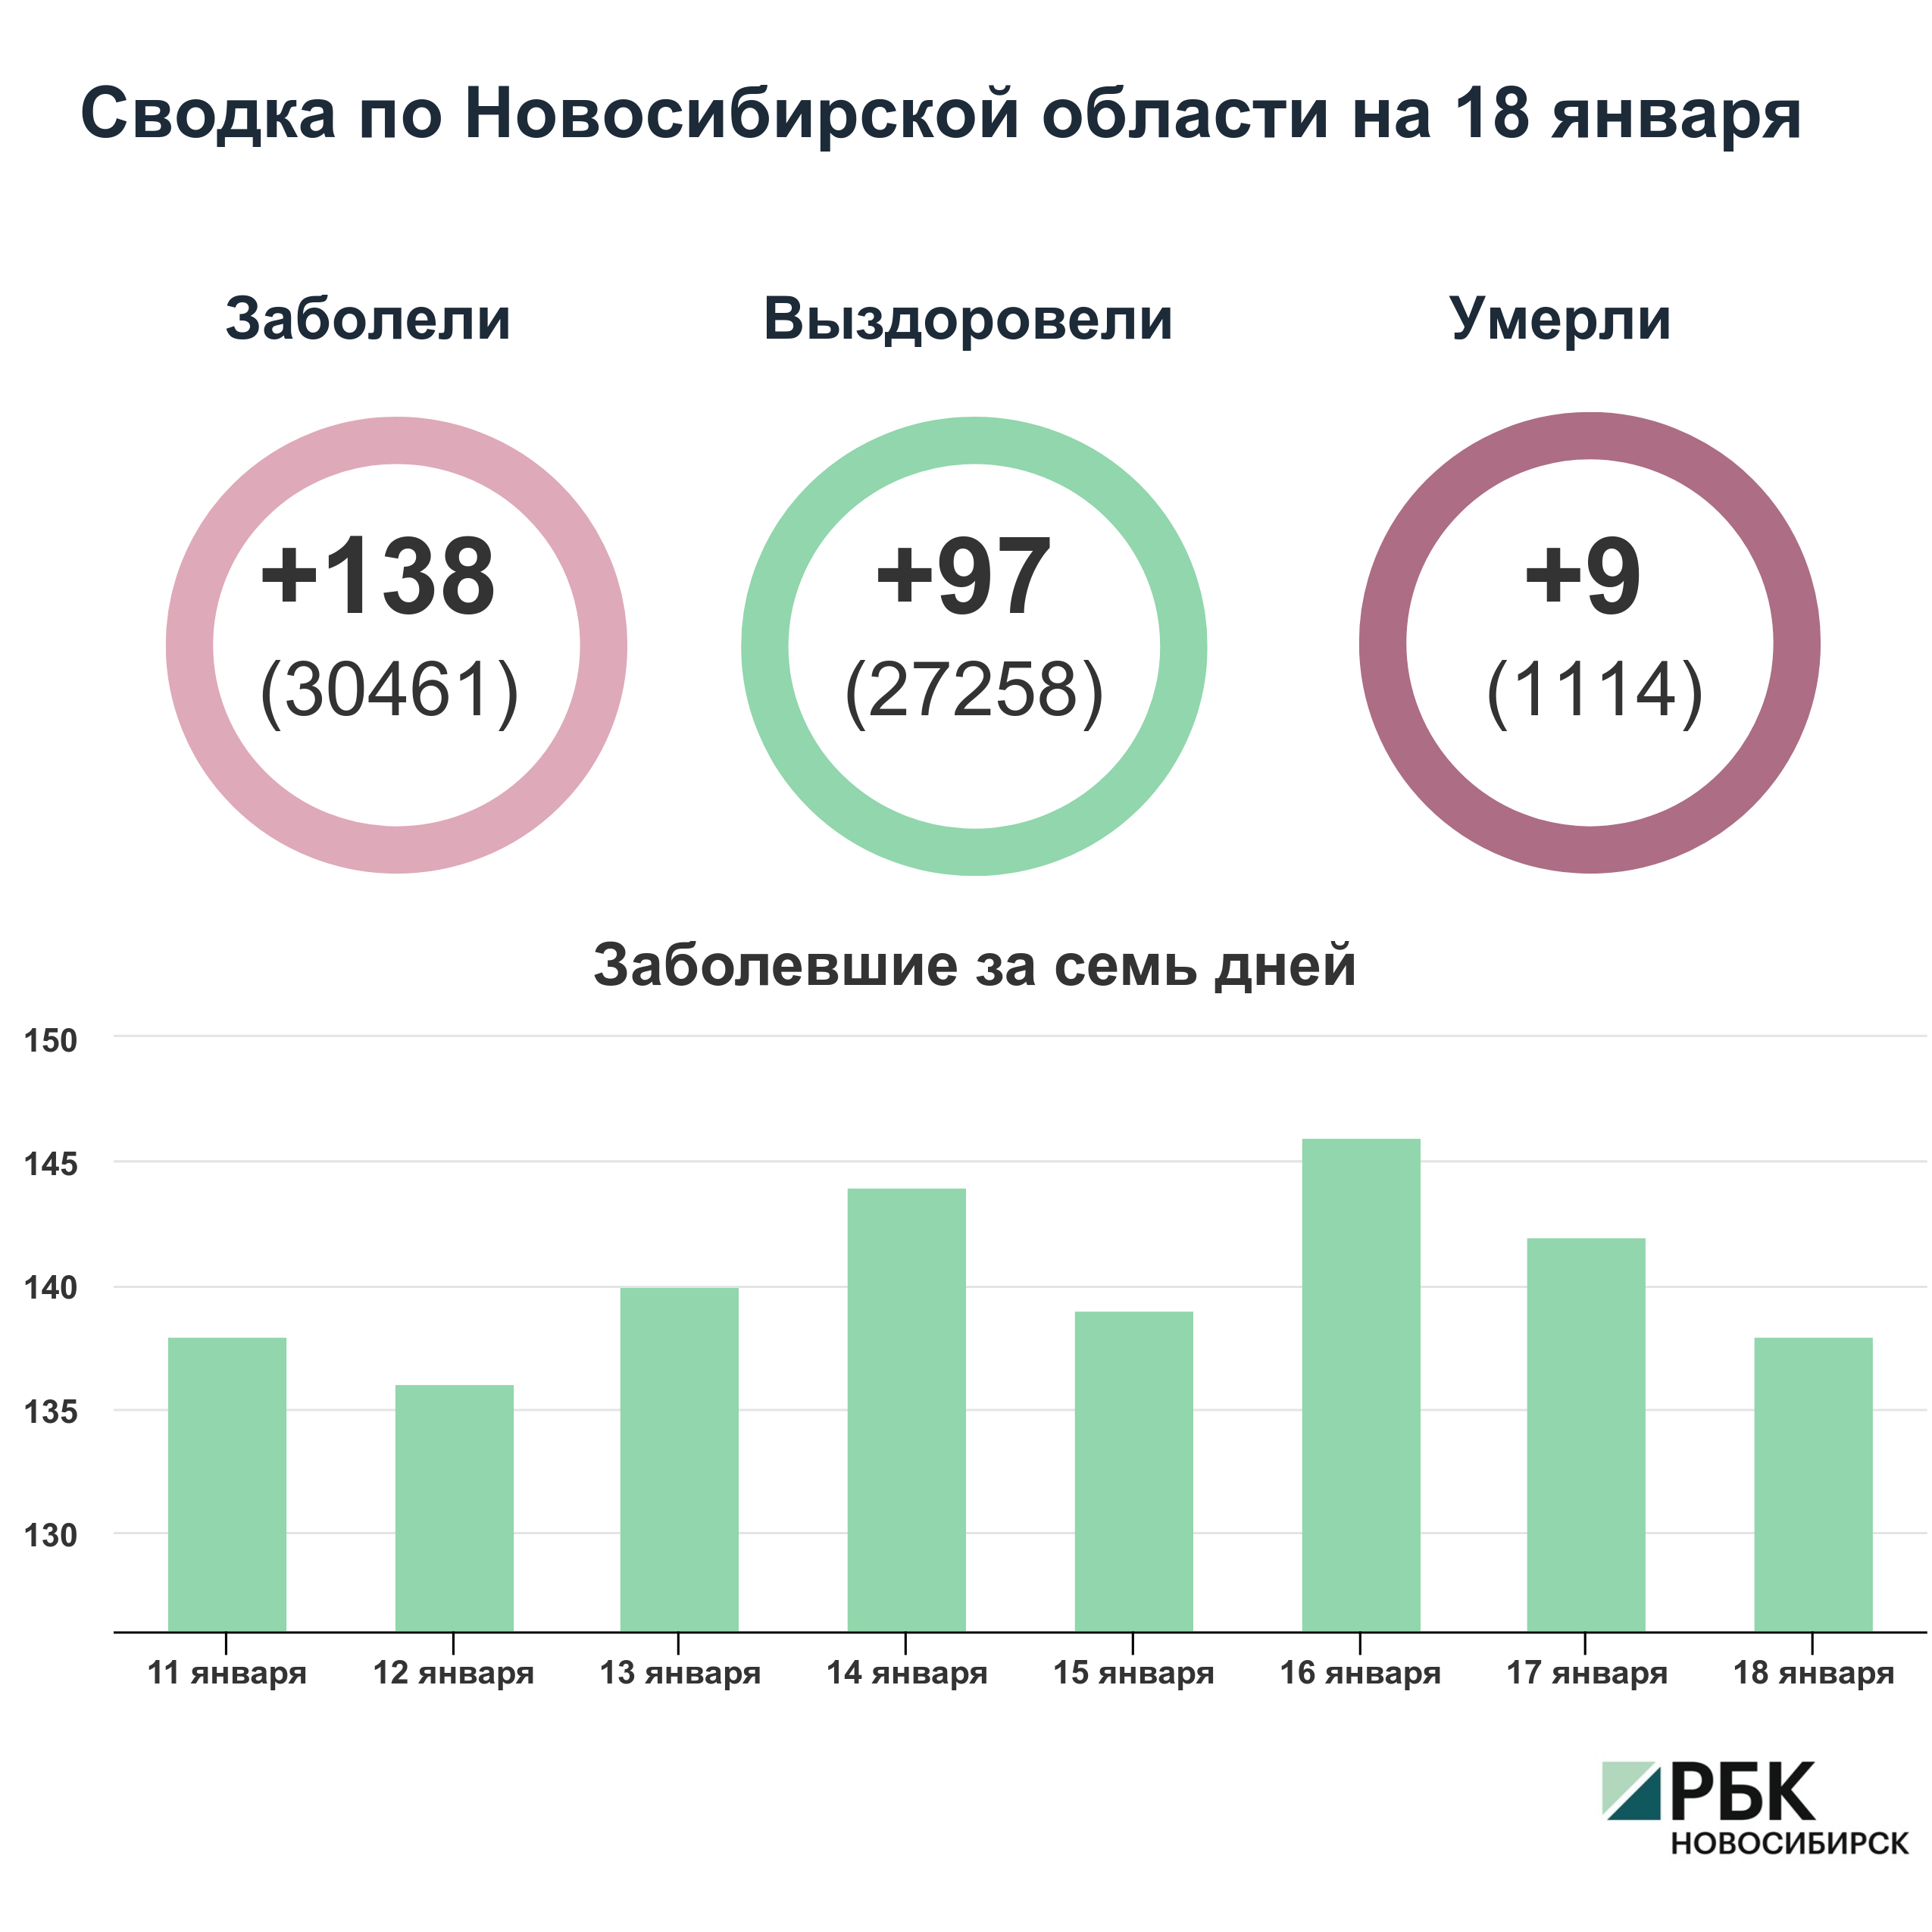 Коронавирус в Новосибирске: сводка на 18 января